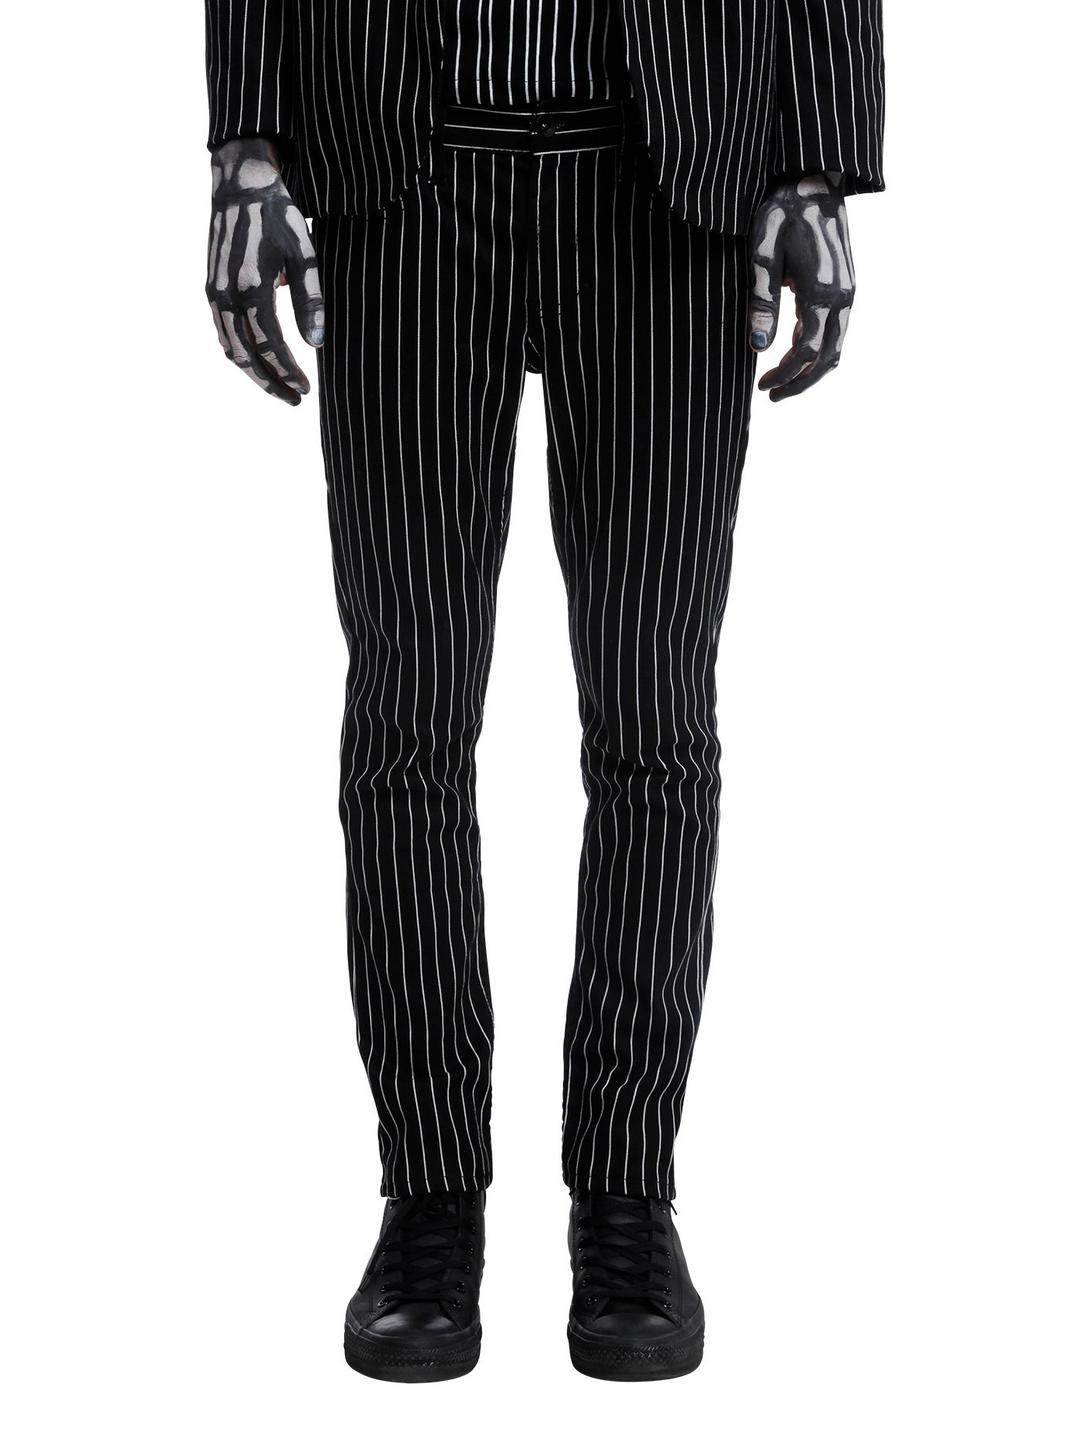 RUDE Black & White Pinstripe Pants, BLACK, hi-res